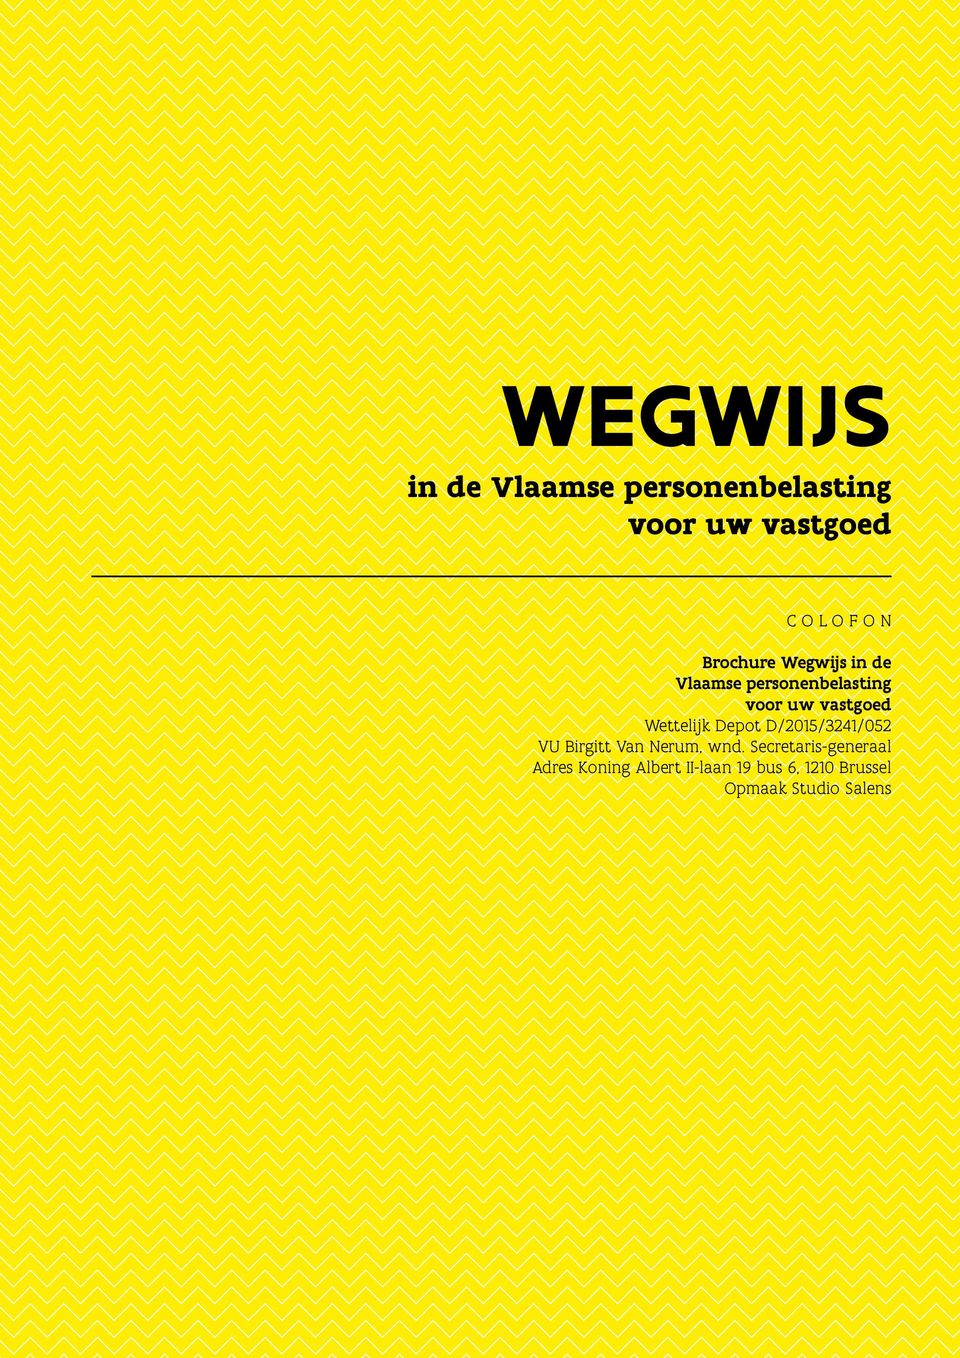 Wettelijk Depot D/2015/3241/052 VU Birgitt Van Nerum, wnd.